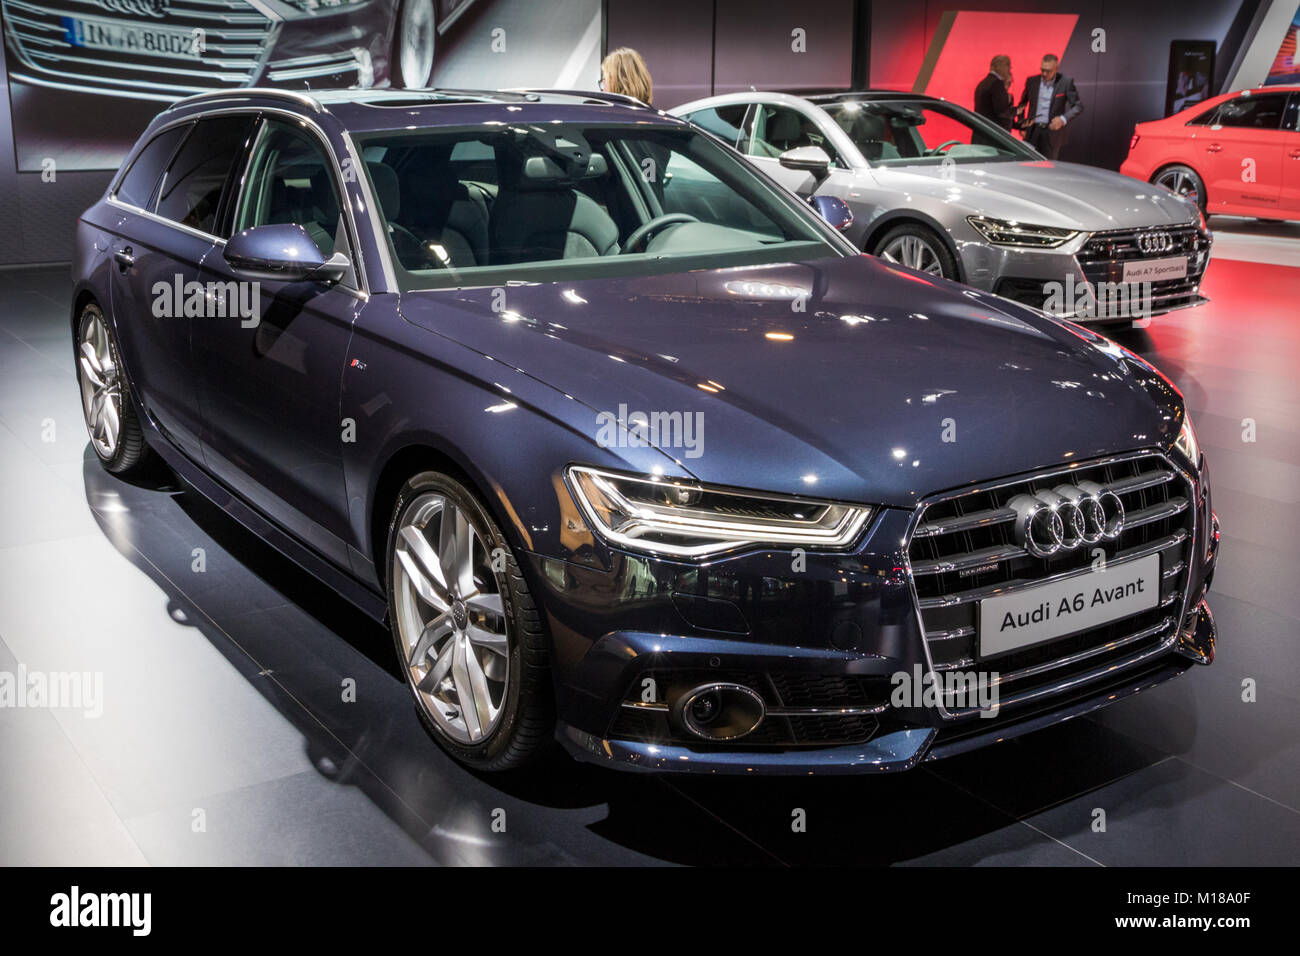 Brüssel - Jan 10, 2018: Audi A6 Avant Car auf dem Automobil-Salon in  Brüssel vorgestellt Stockfotografie - Alamy